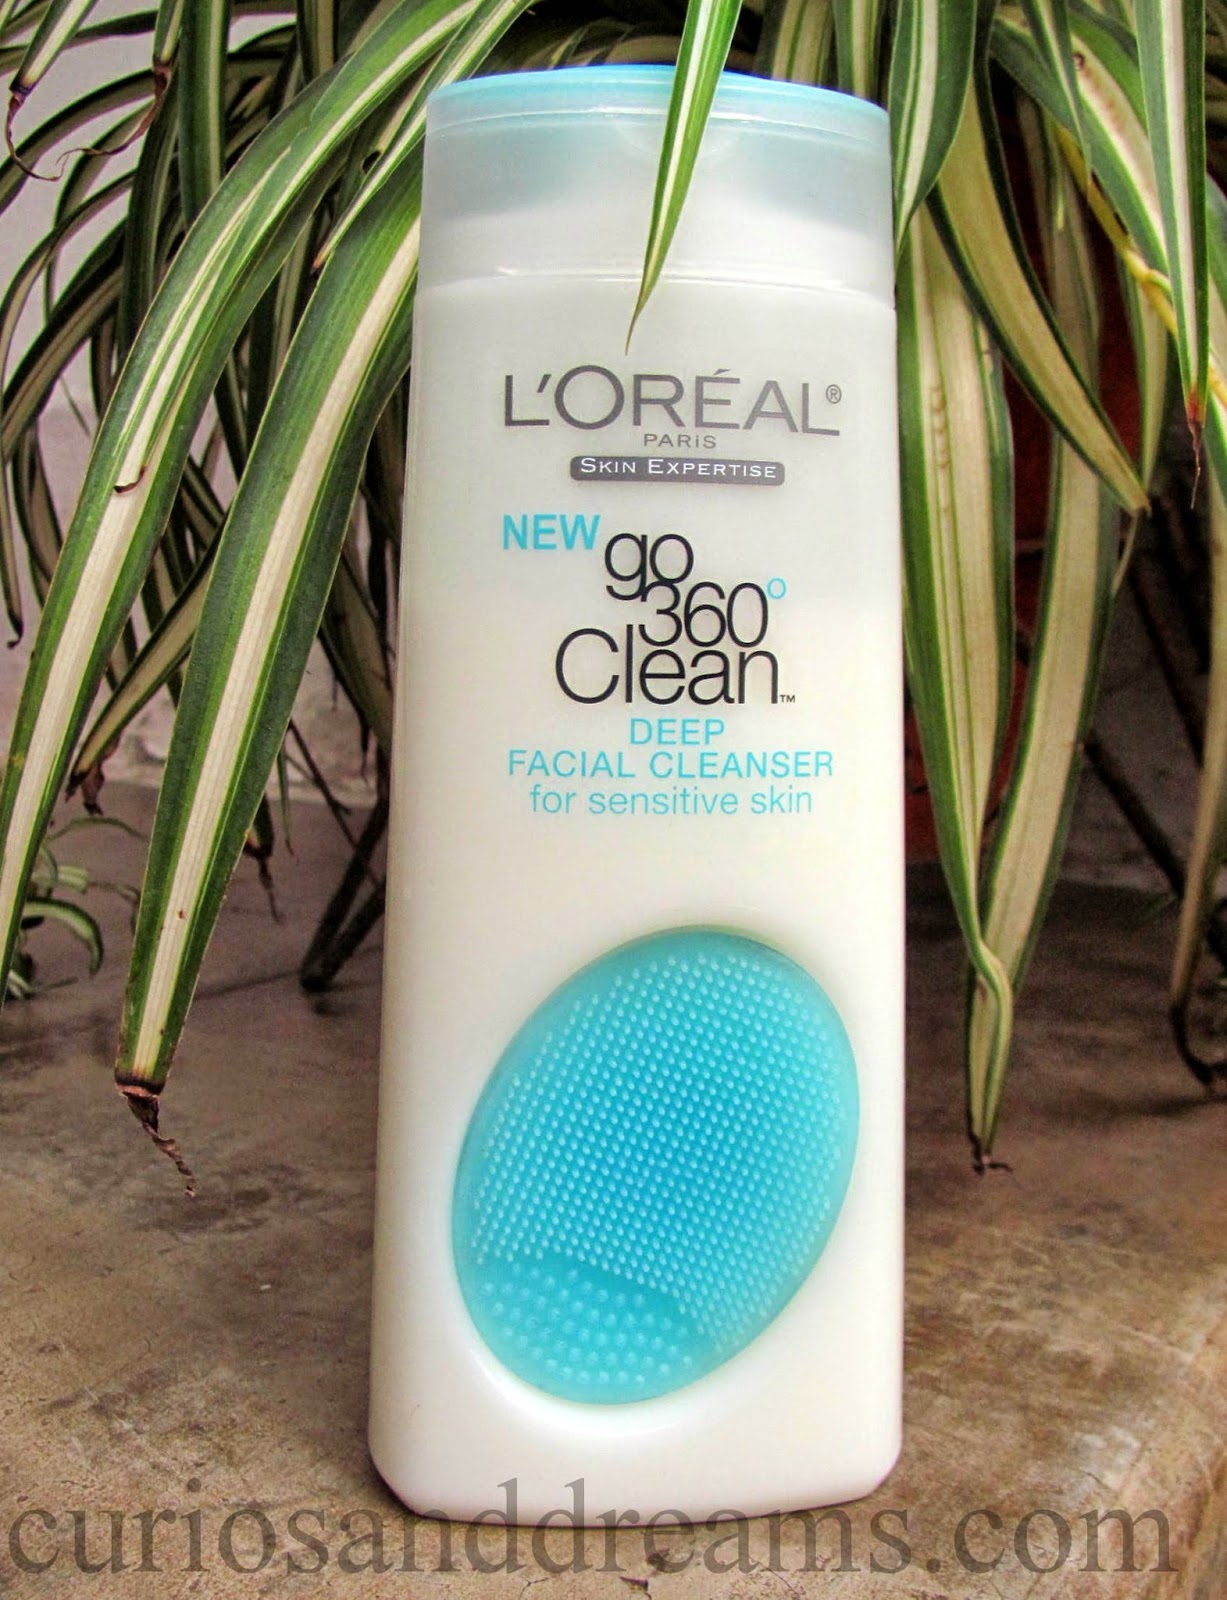 L'Oreal Go 360 Clean Deep Facial Cleanser Sensitive Skin Review